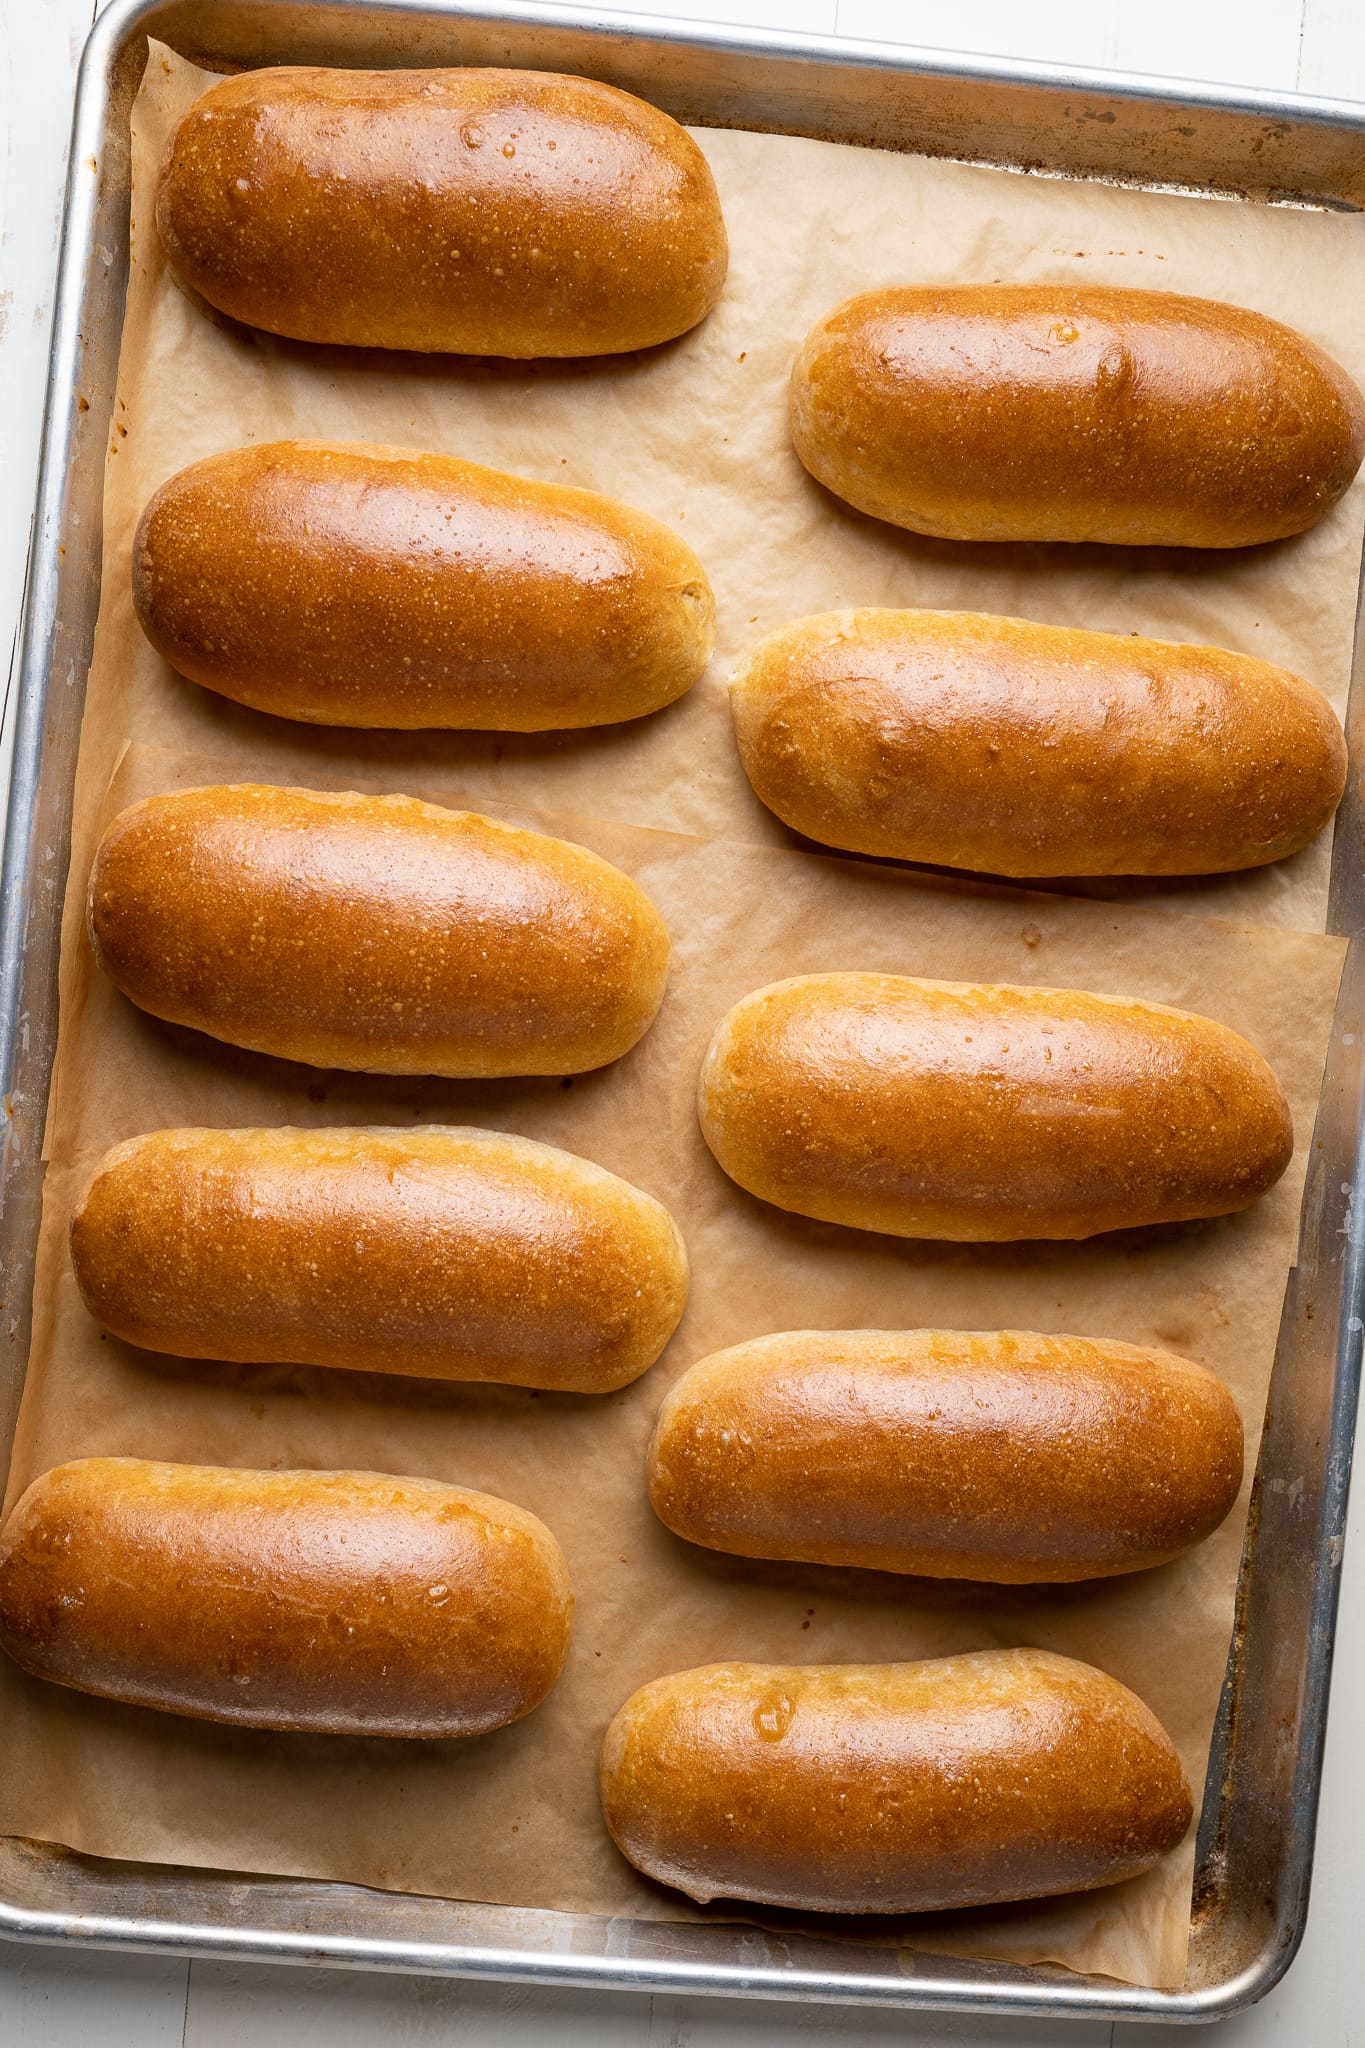 Homemade hot dog buns baked